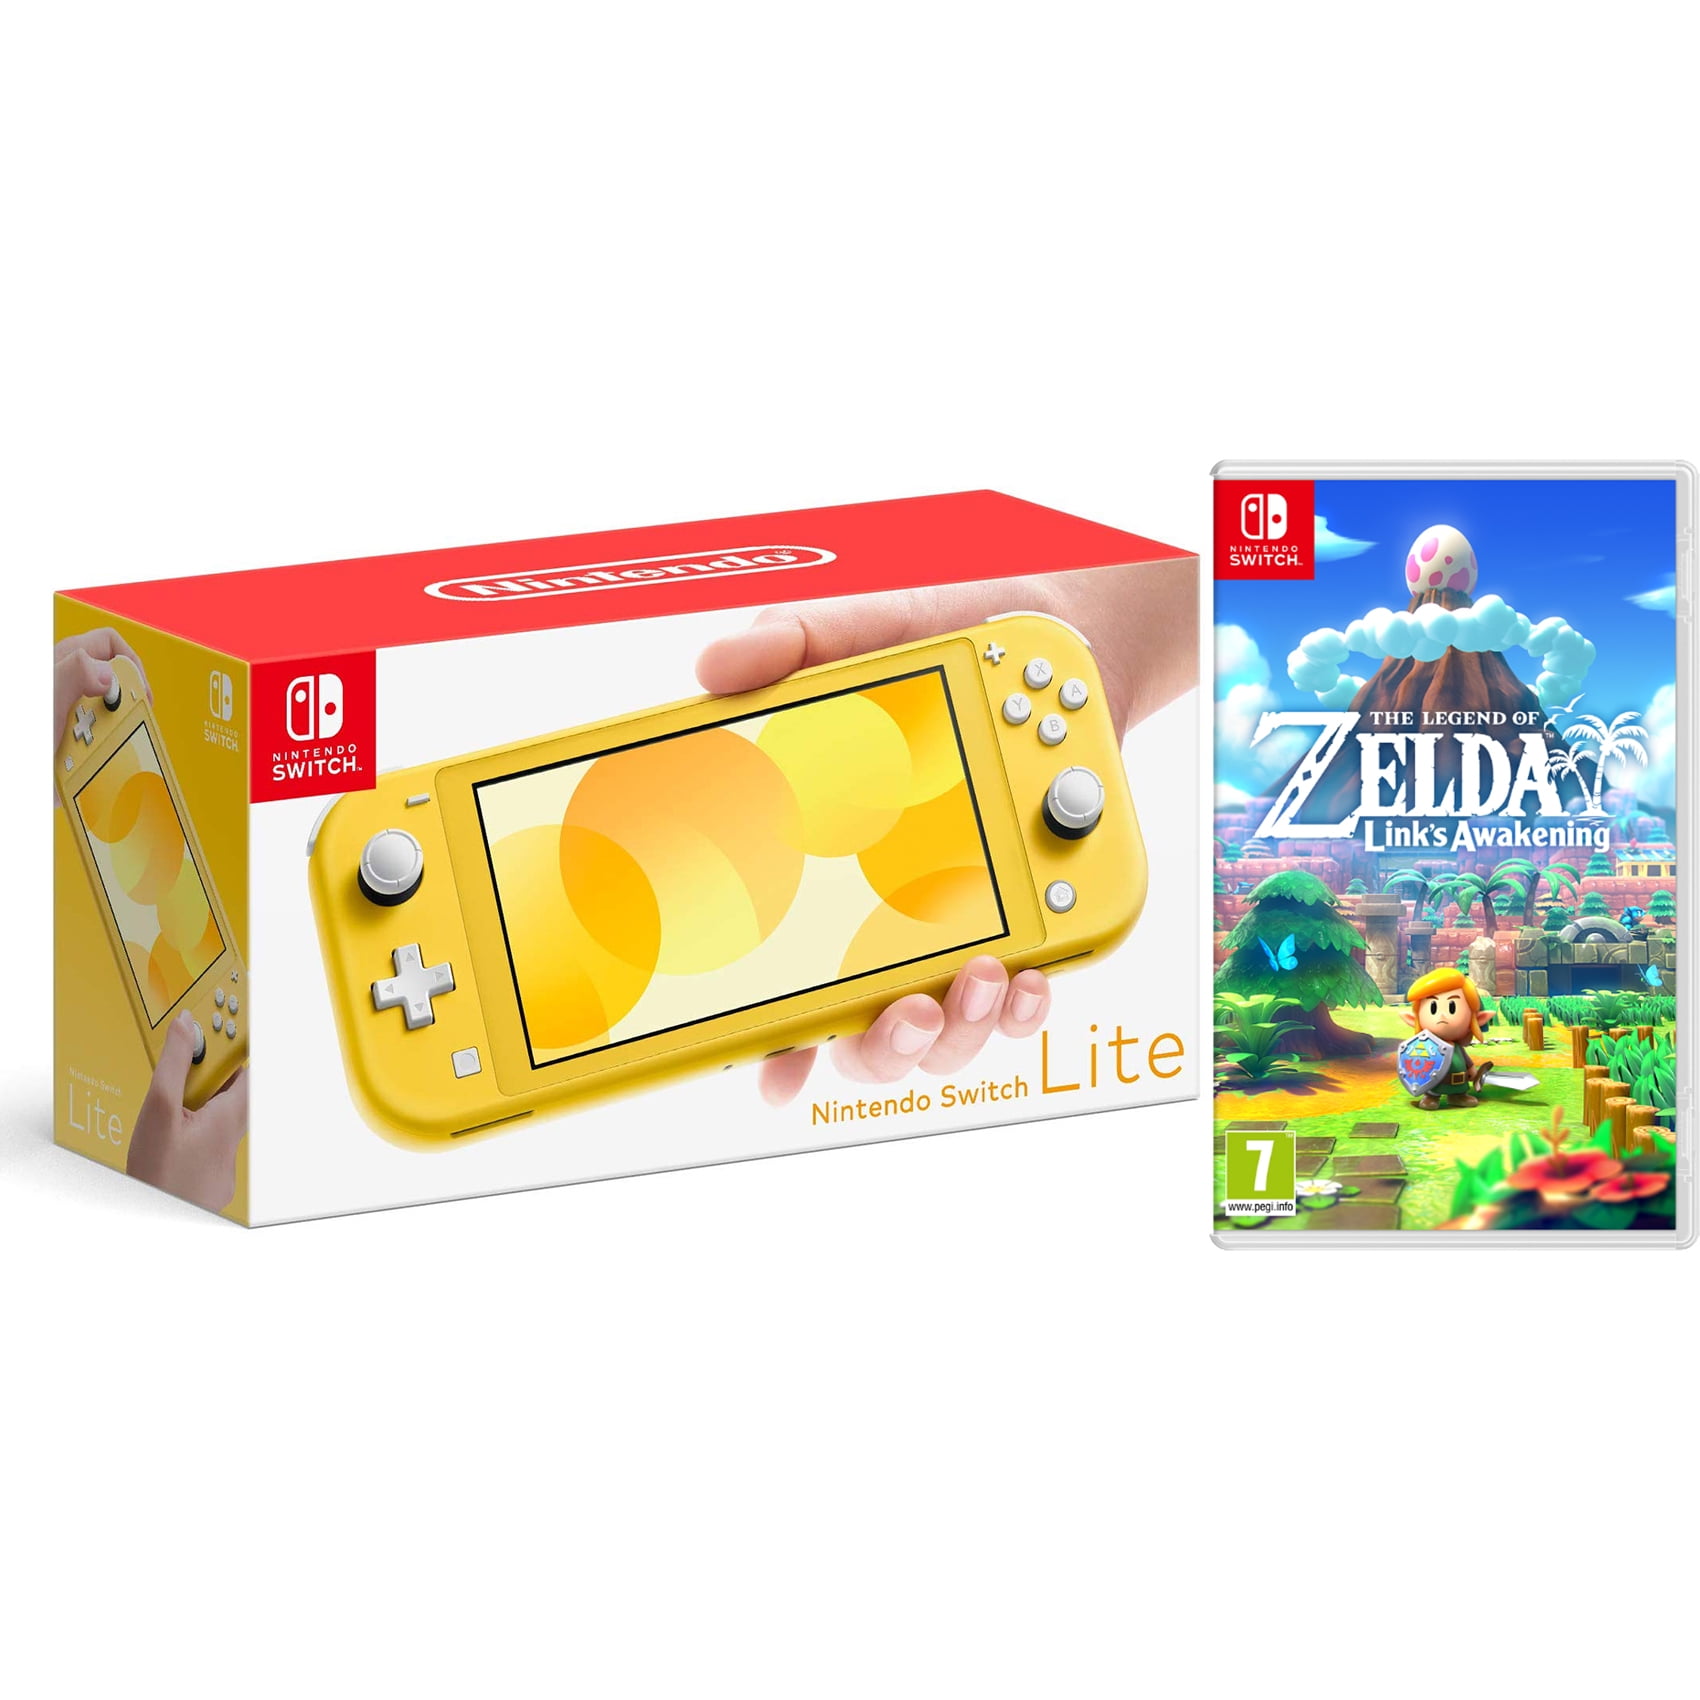 Nintendo Switch Lite Yellow Bundle with The Legend of Zelda